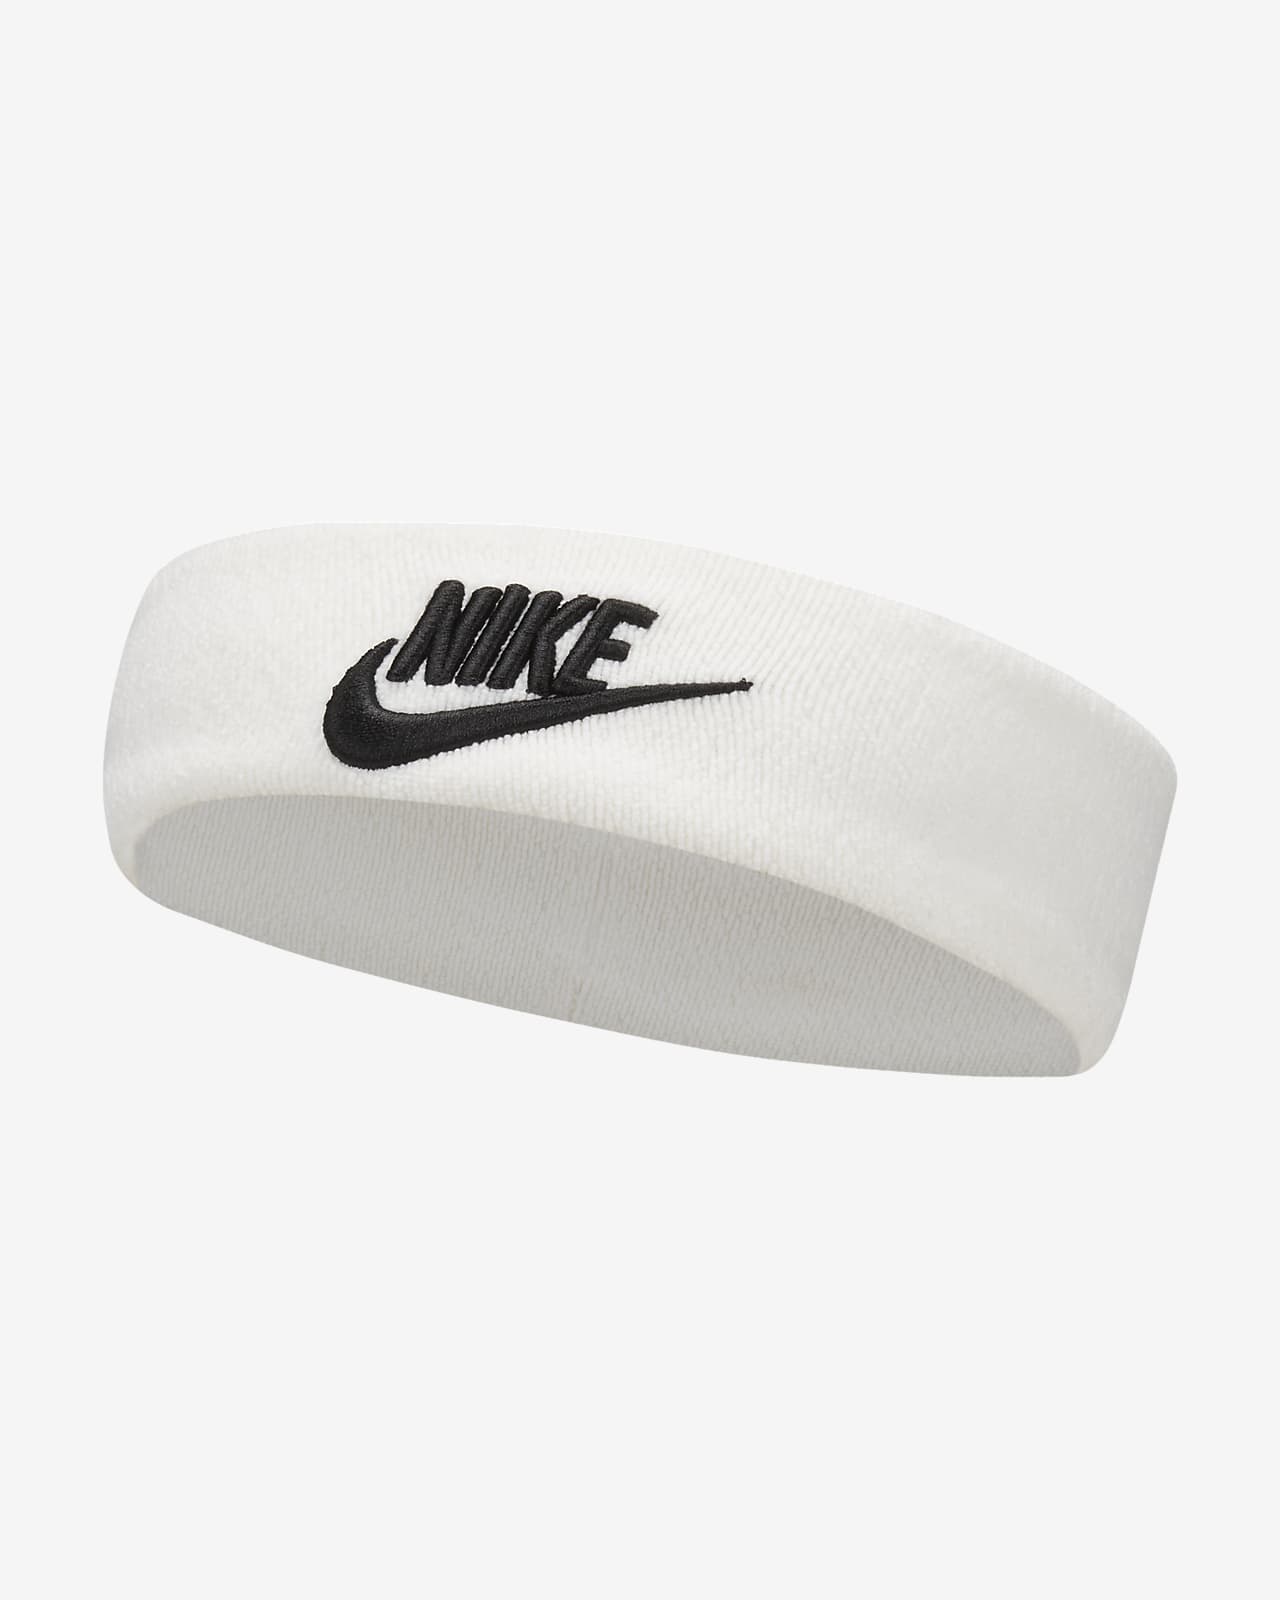 NEW Nike Swoosh Headband Sweat Band White Headband Tennis Fitness Jogging  Sports